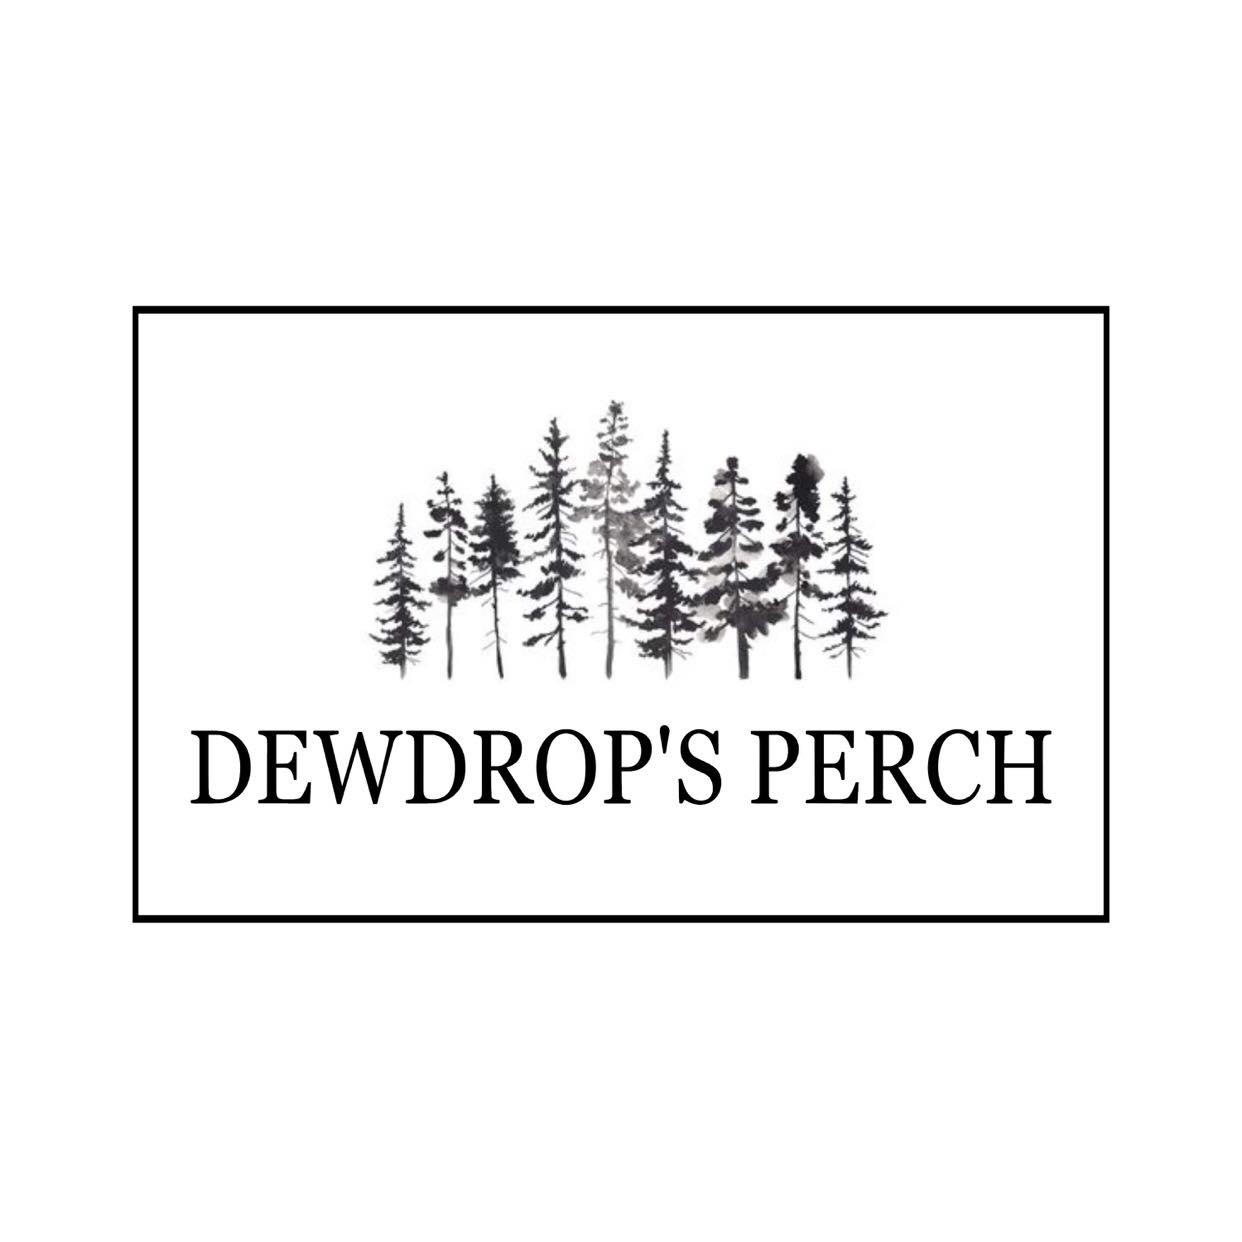 Dewdrops Perch - Tacoma Washington